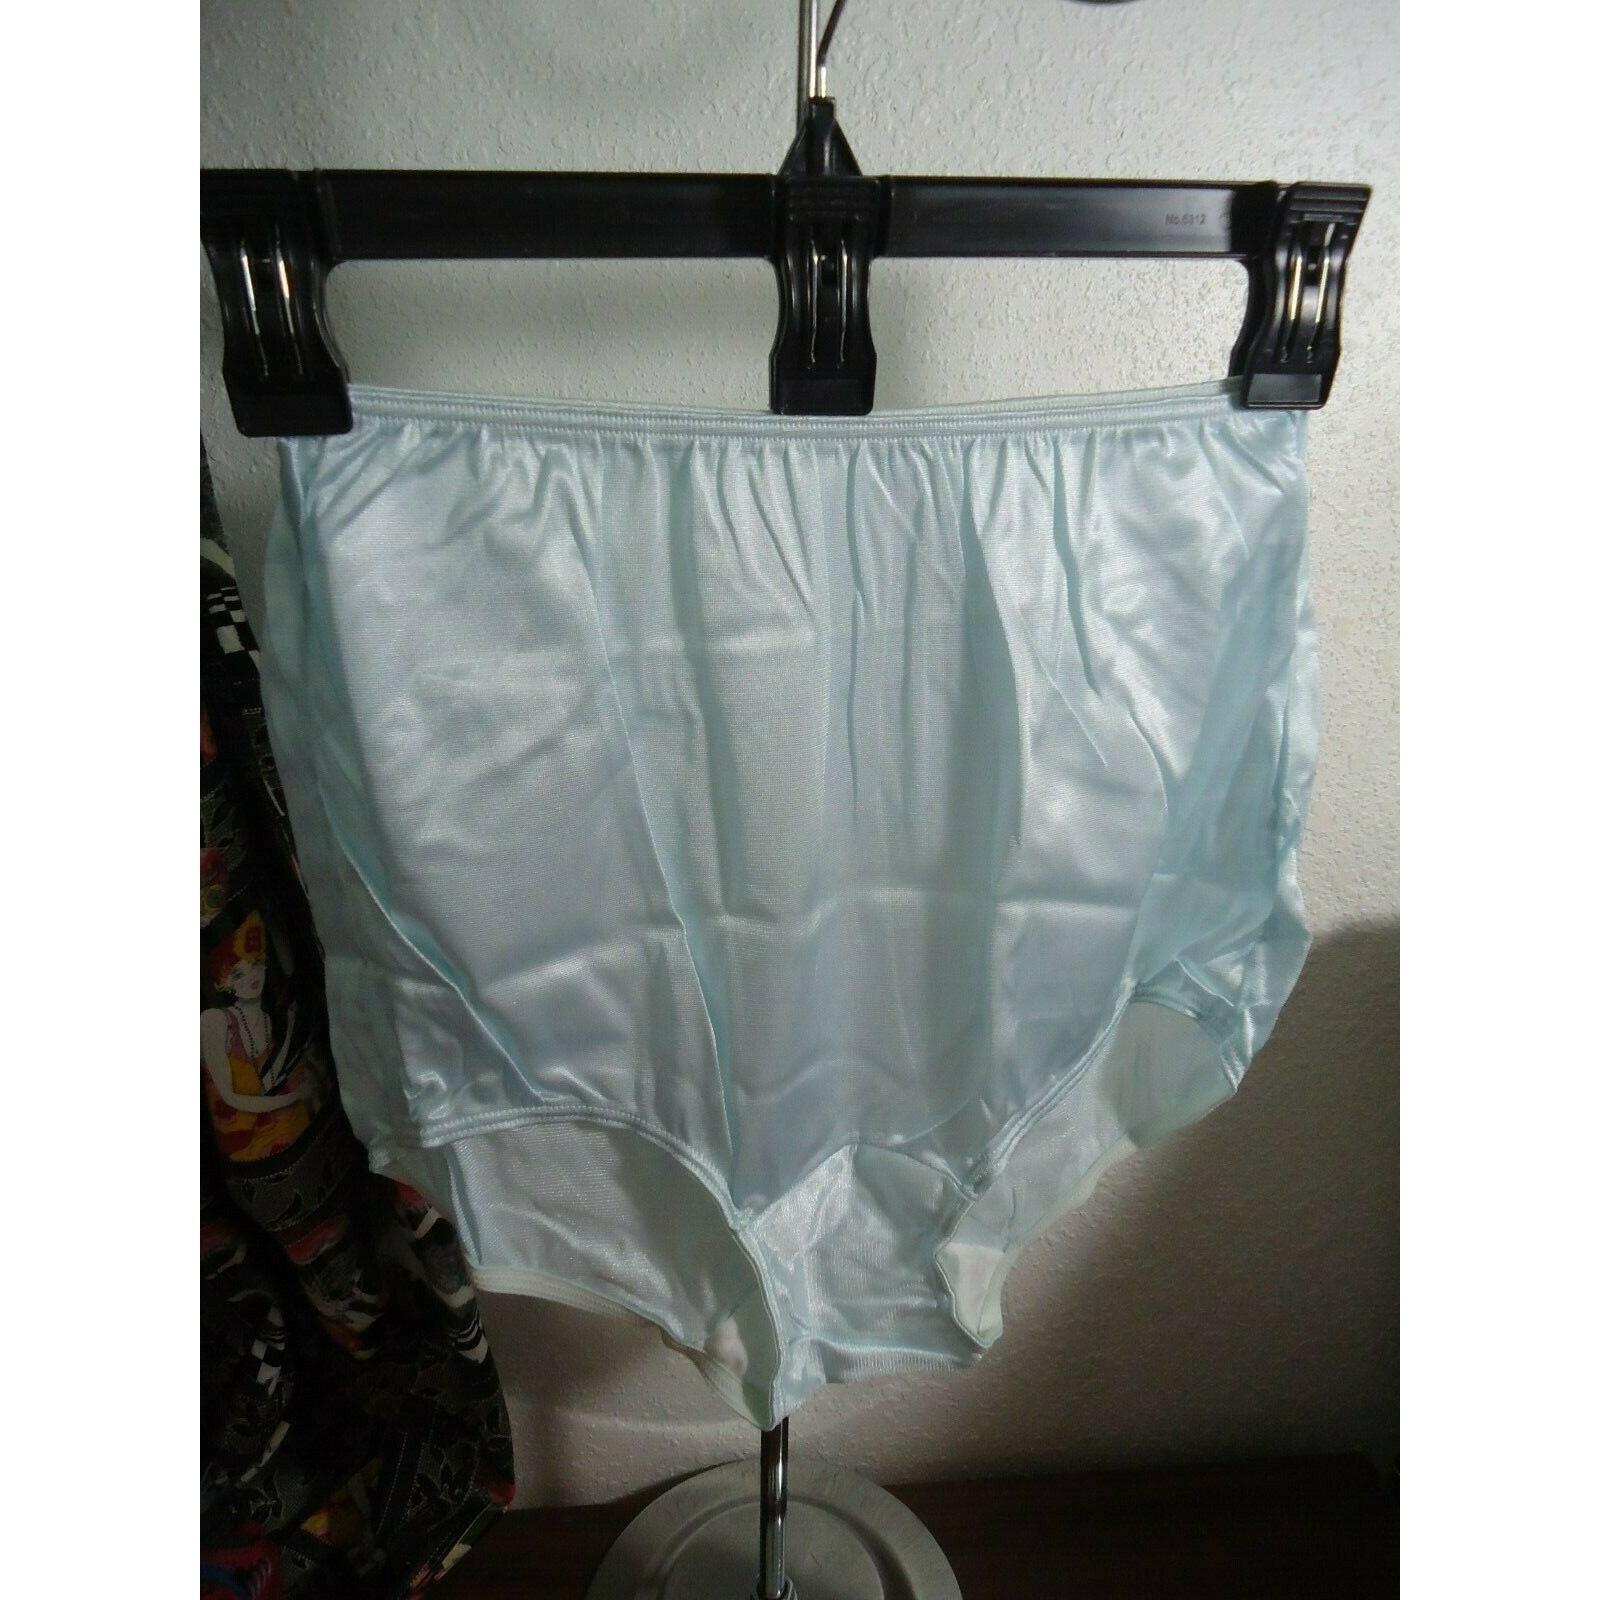 NOS Vtg Dark Hunter Green Nylon Tricot Jockey Briefs Underwear L 36 38  Unworn -  Canada